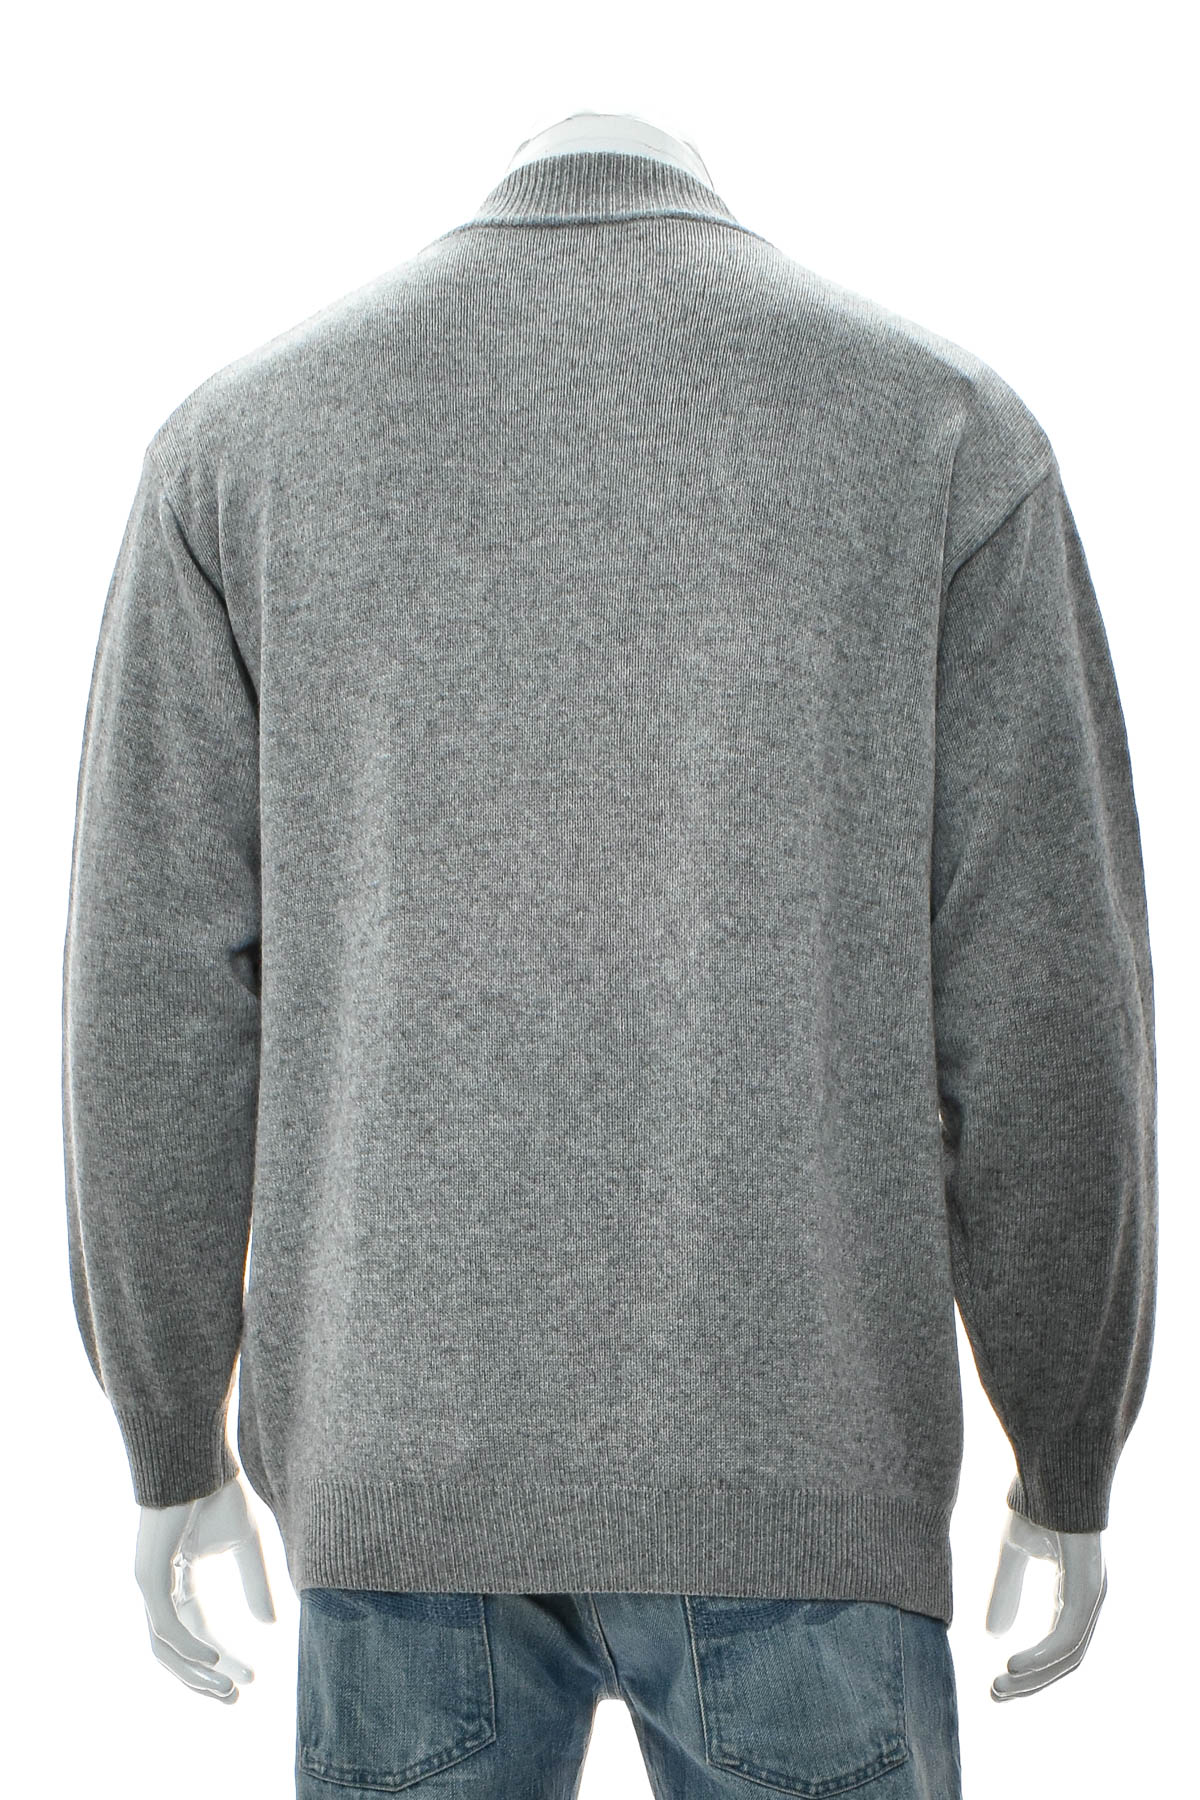 Men's sweater - Brian Scott - 1